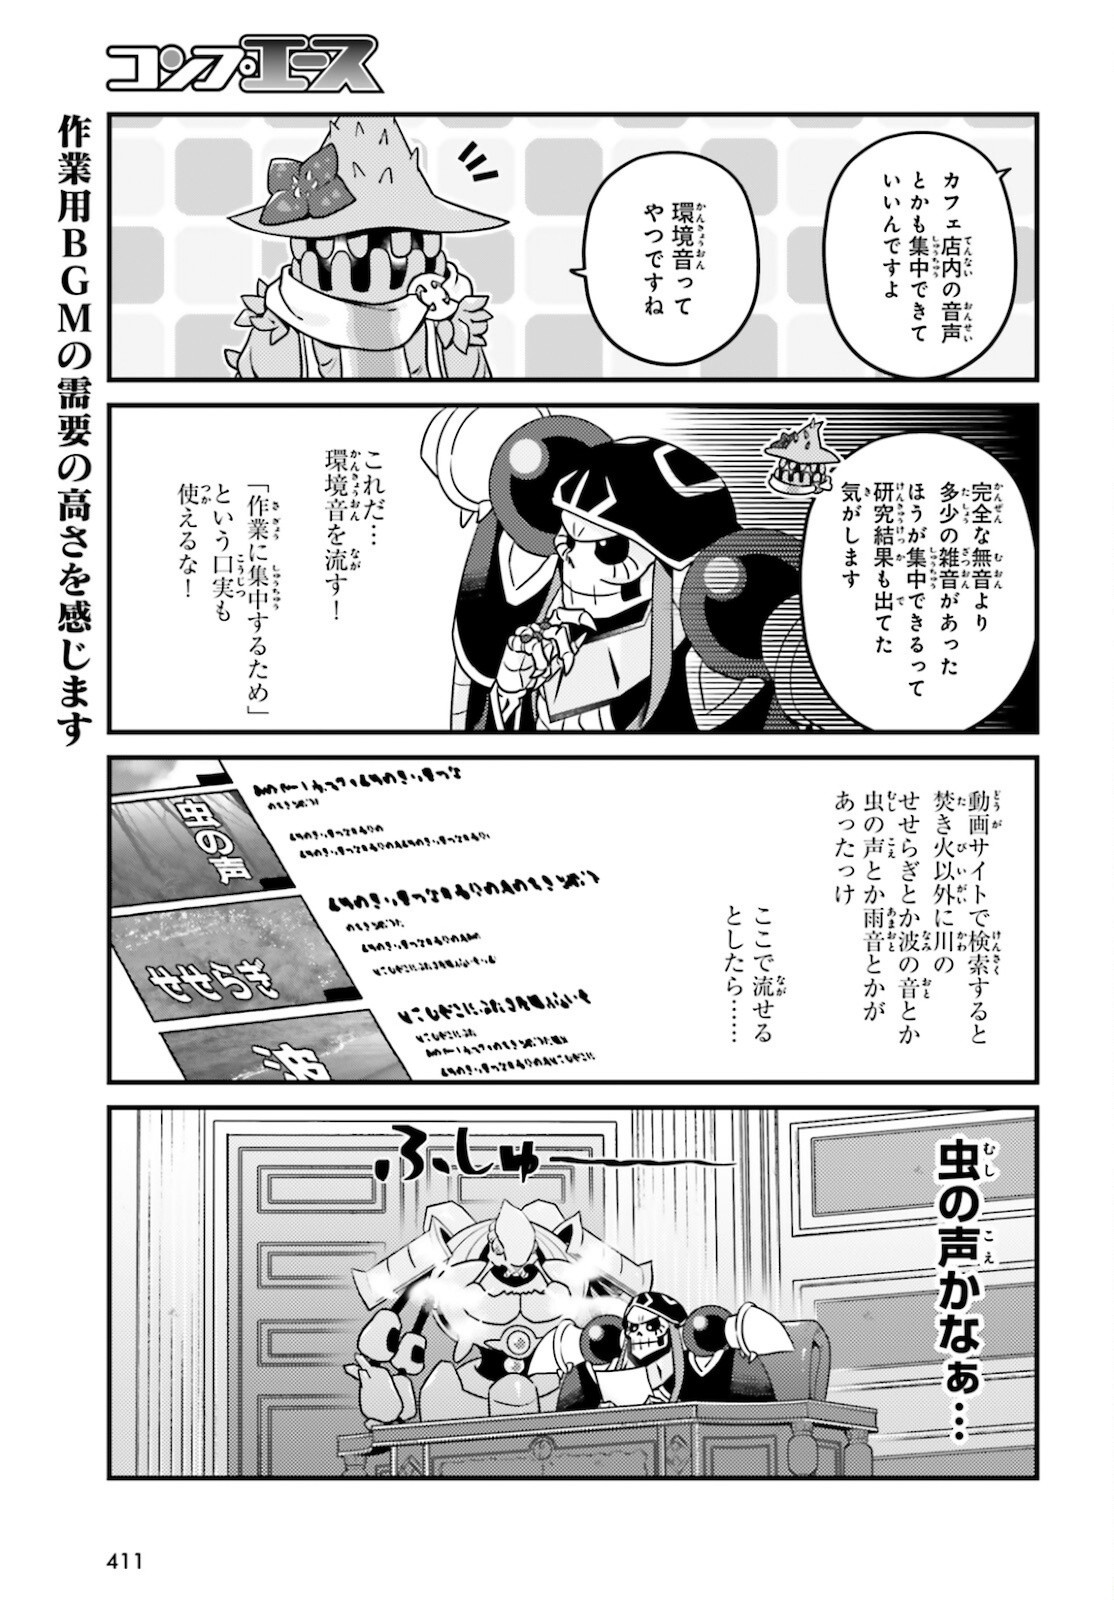 Overlord-Fushisha-no-Oh - Chapter 53 - Page 5